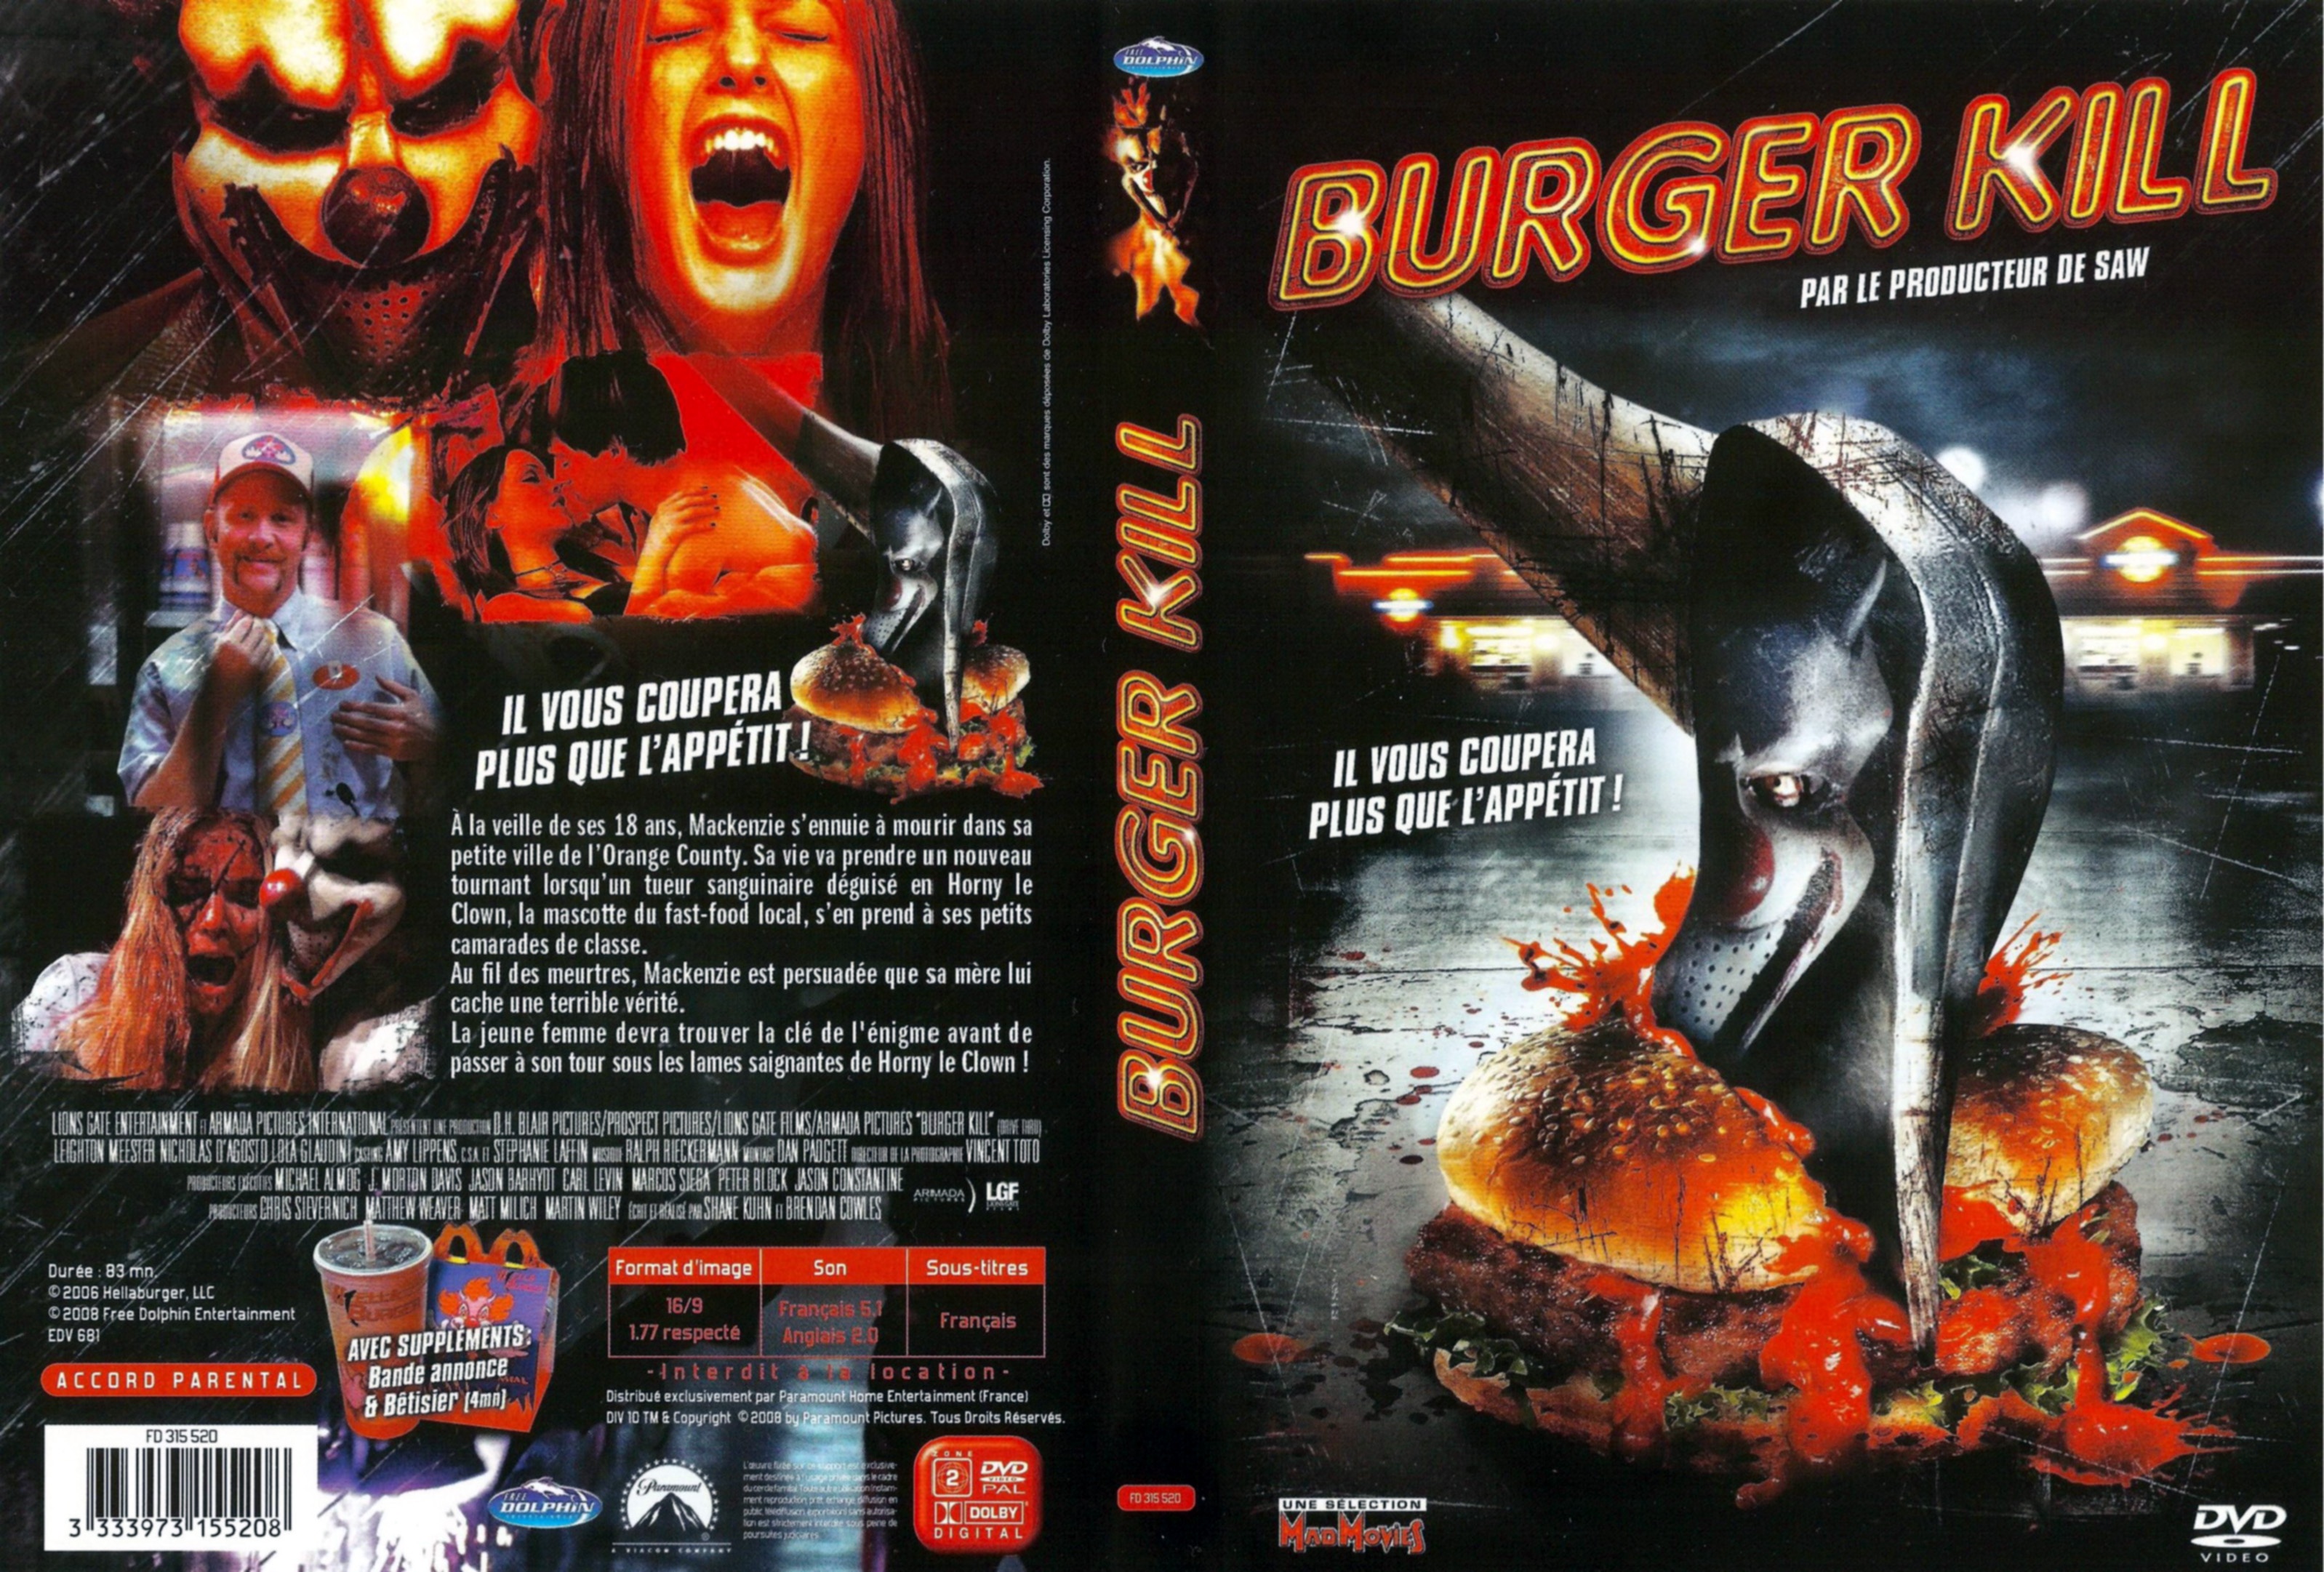 Jaquette DVD Burger kill